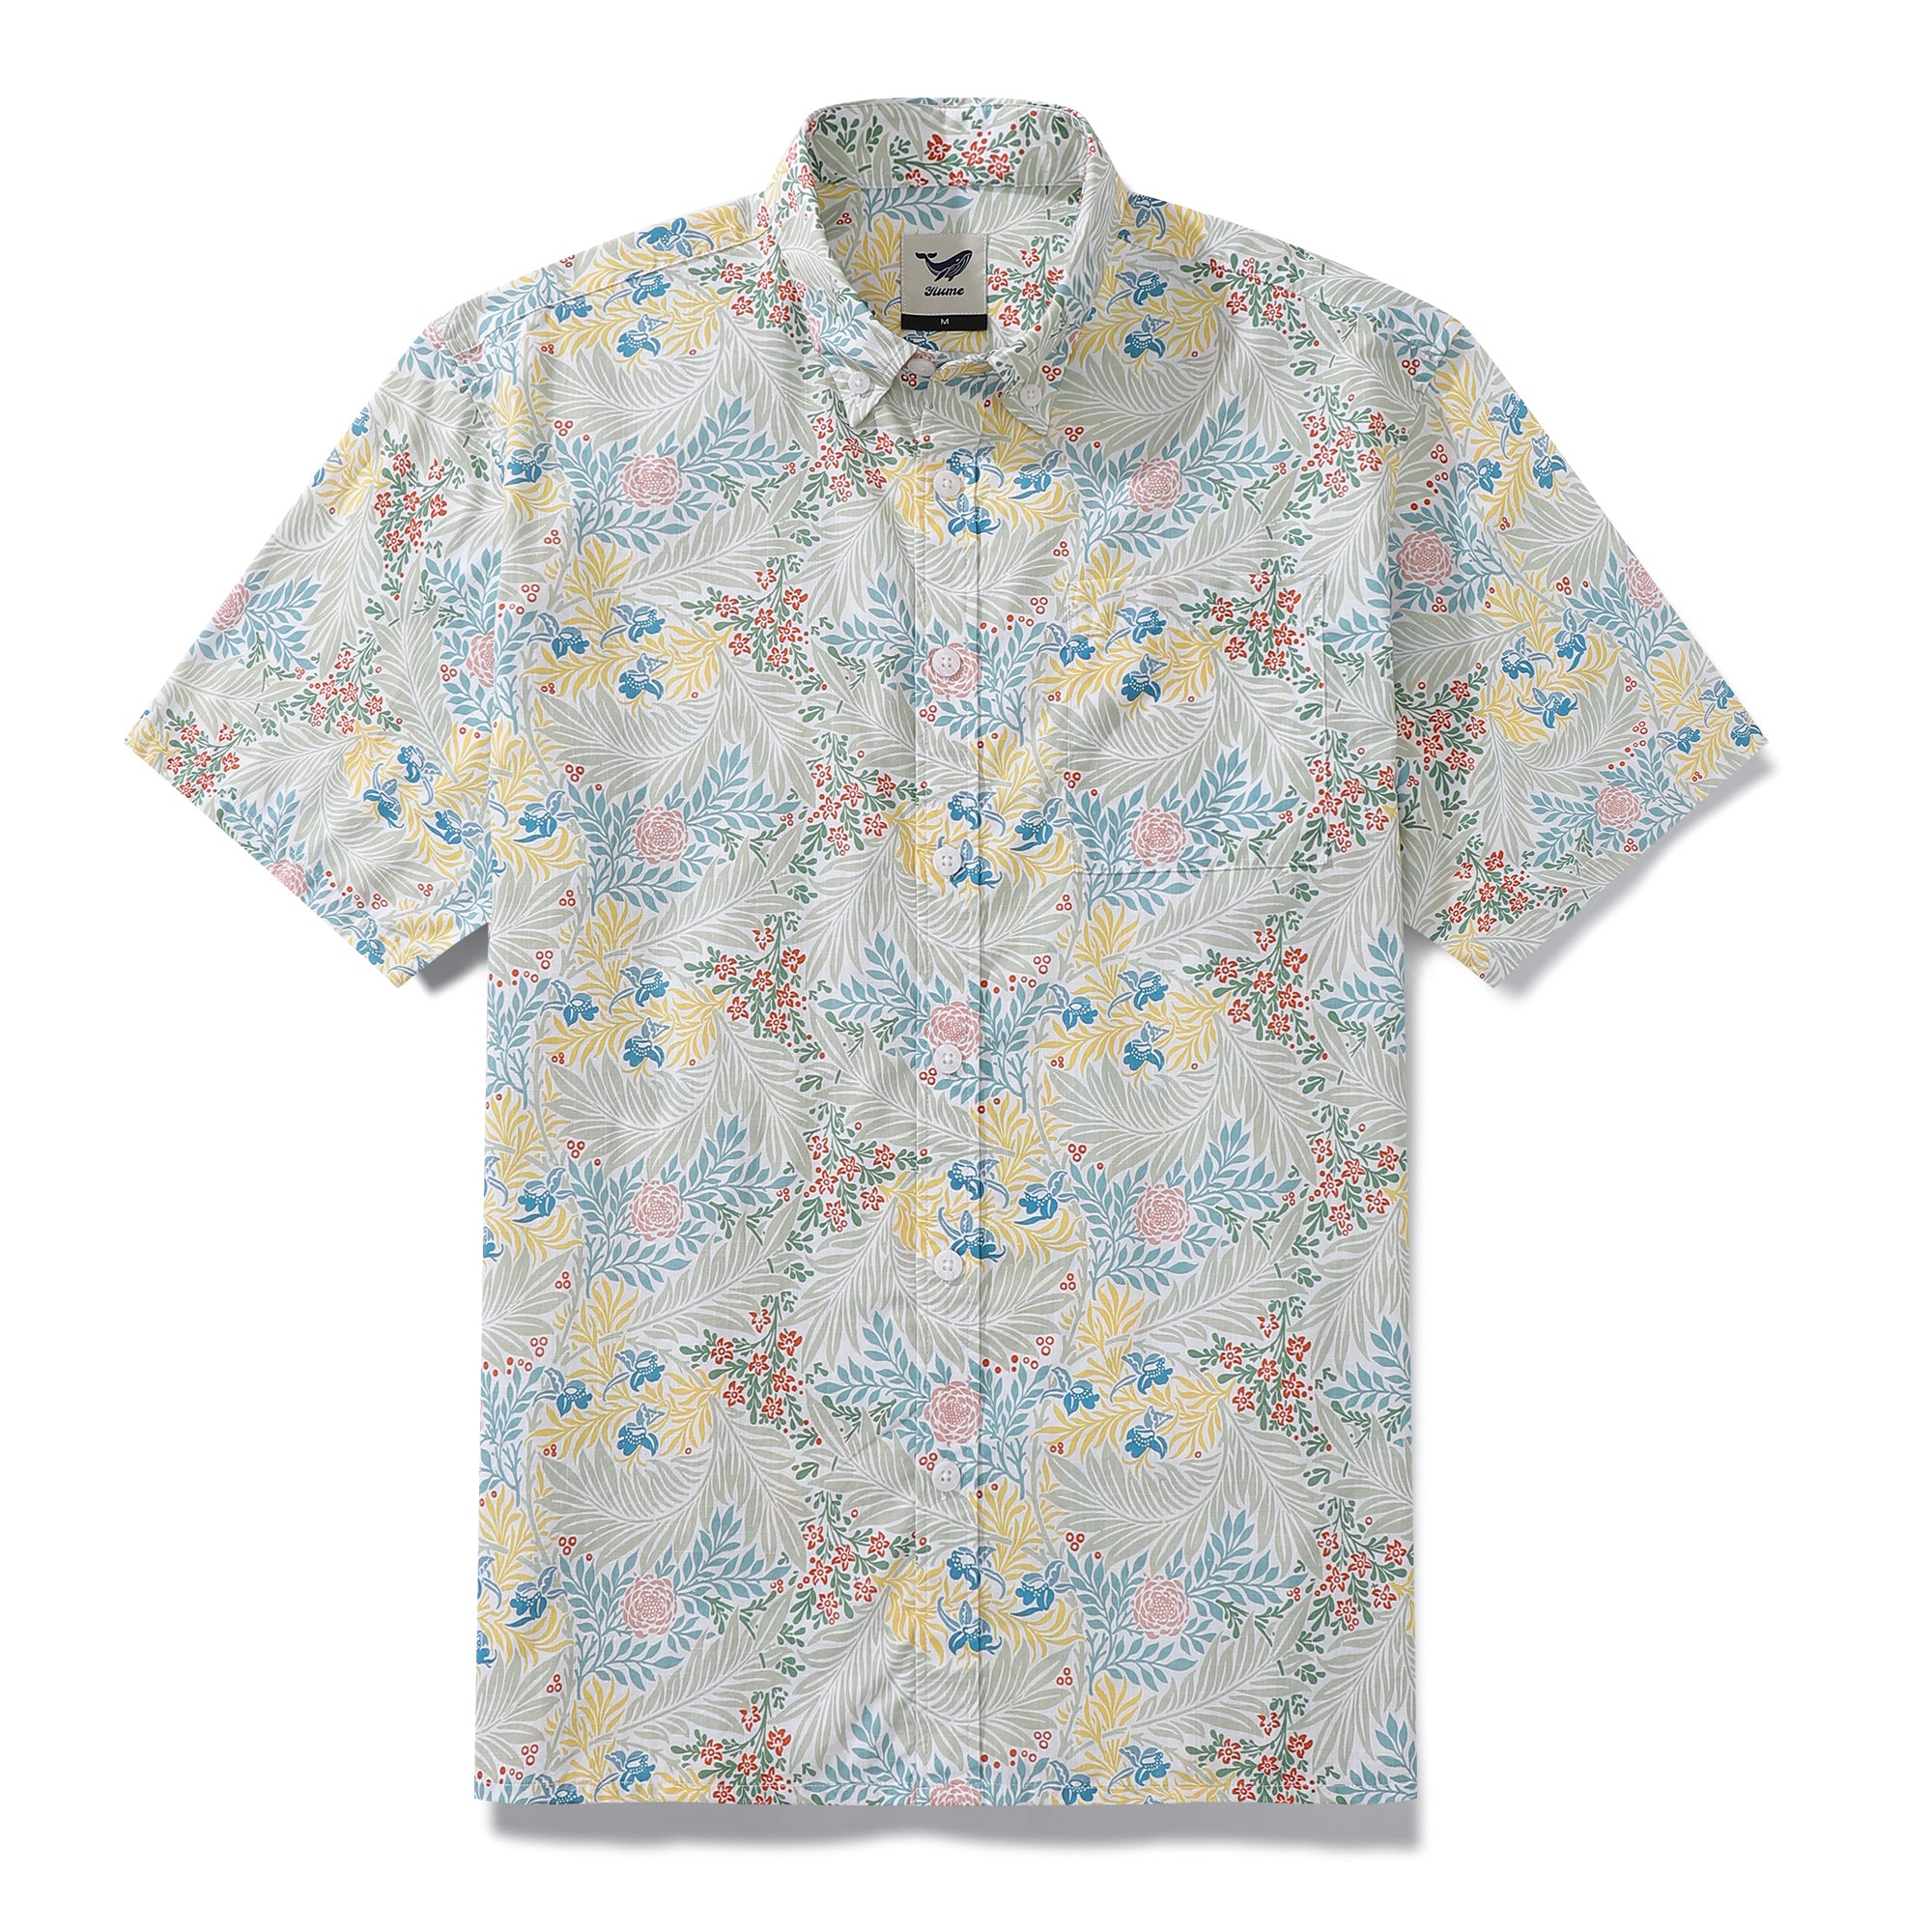 Men's Hawaiian Shirt Flying Swallow Grass Print Cotton Button-down Short Sleeve Aloha Shirt